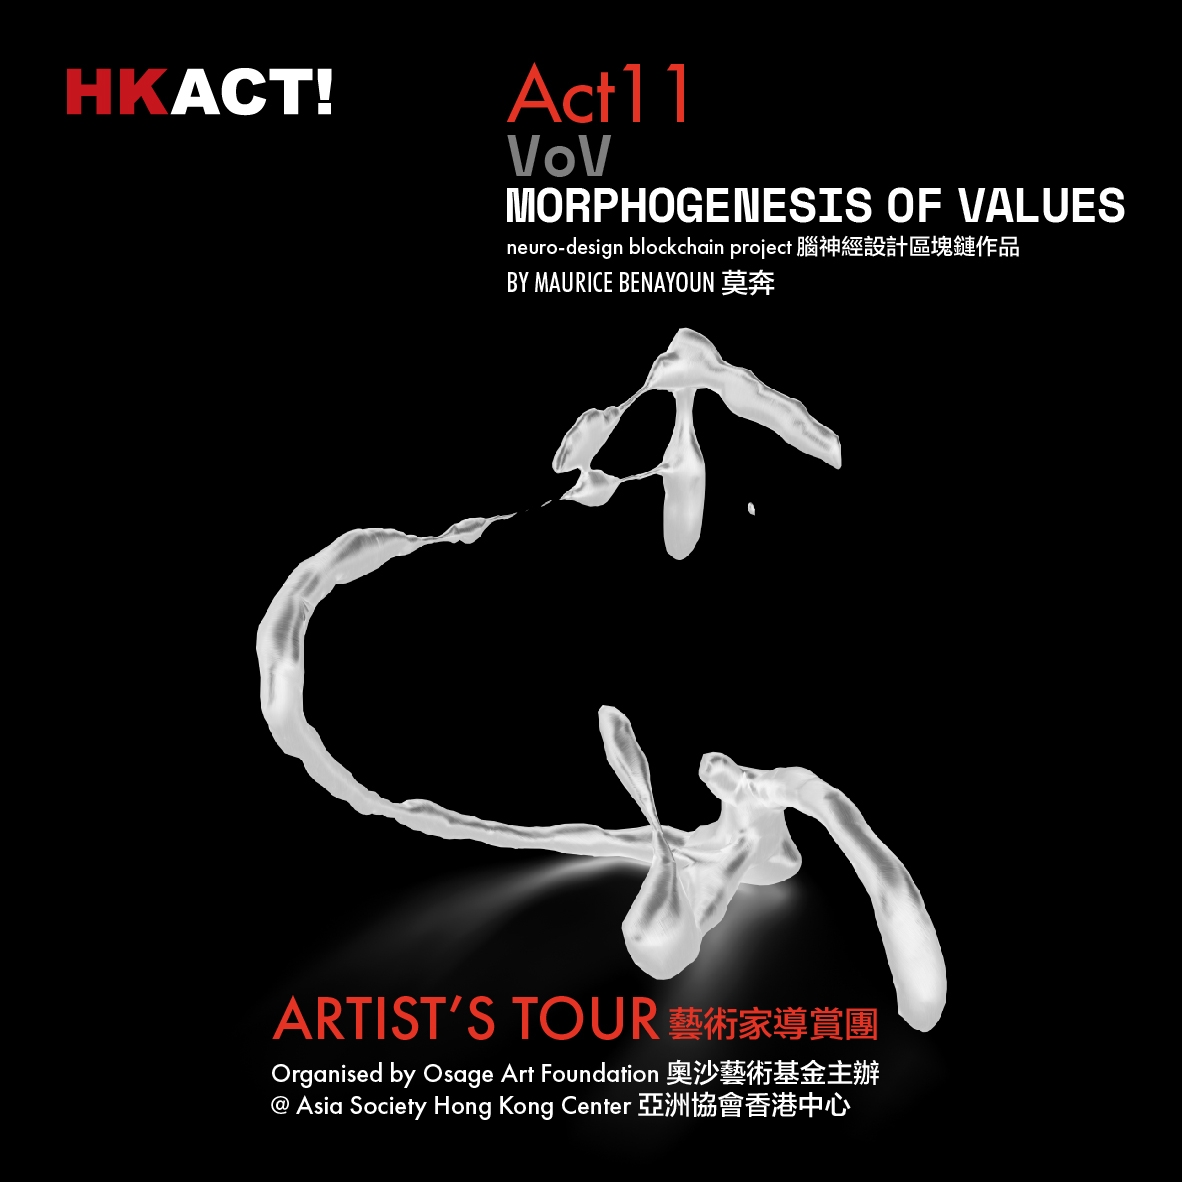 HKACT! Act 11 Aritist's Tour